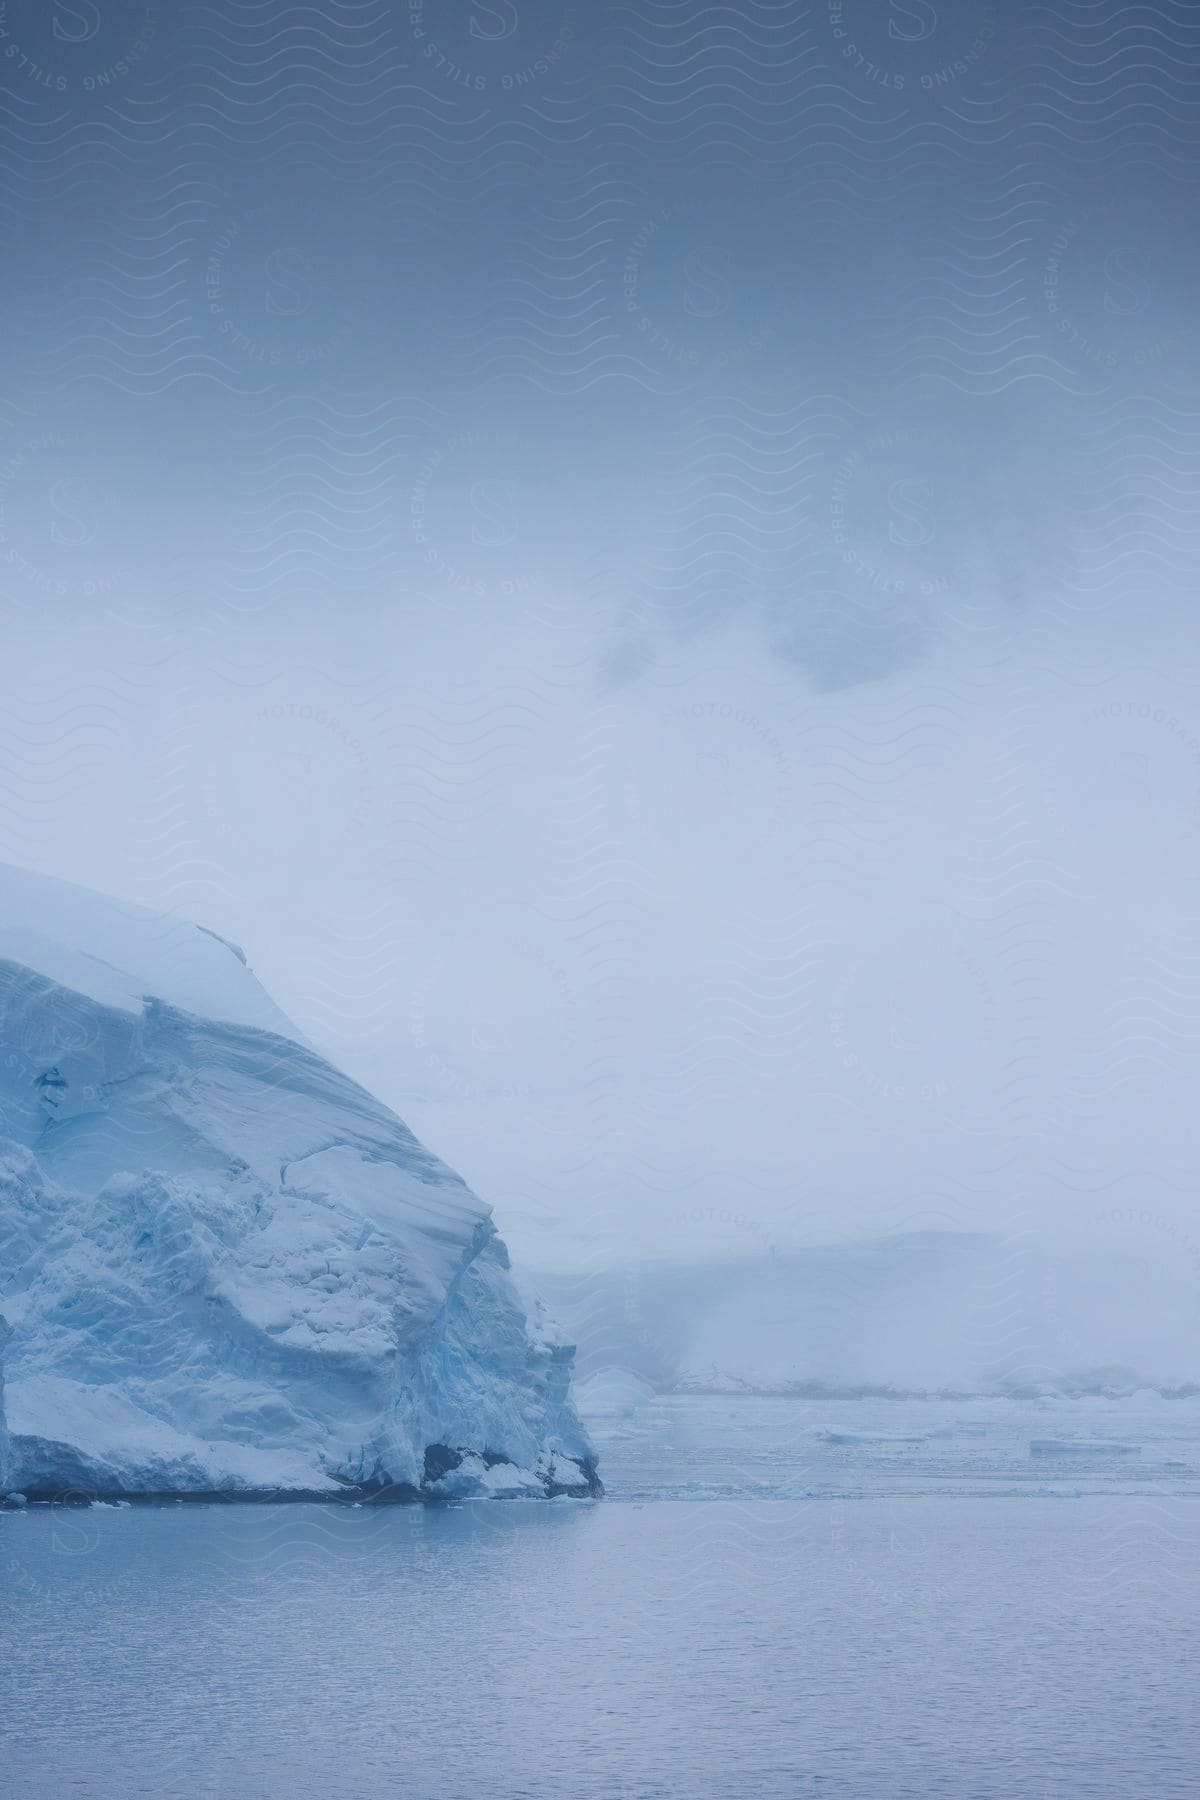 Arctic landscape of icebergs